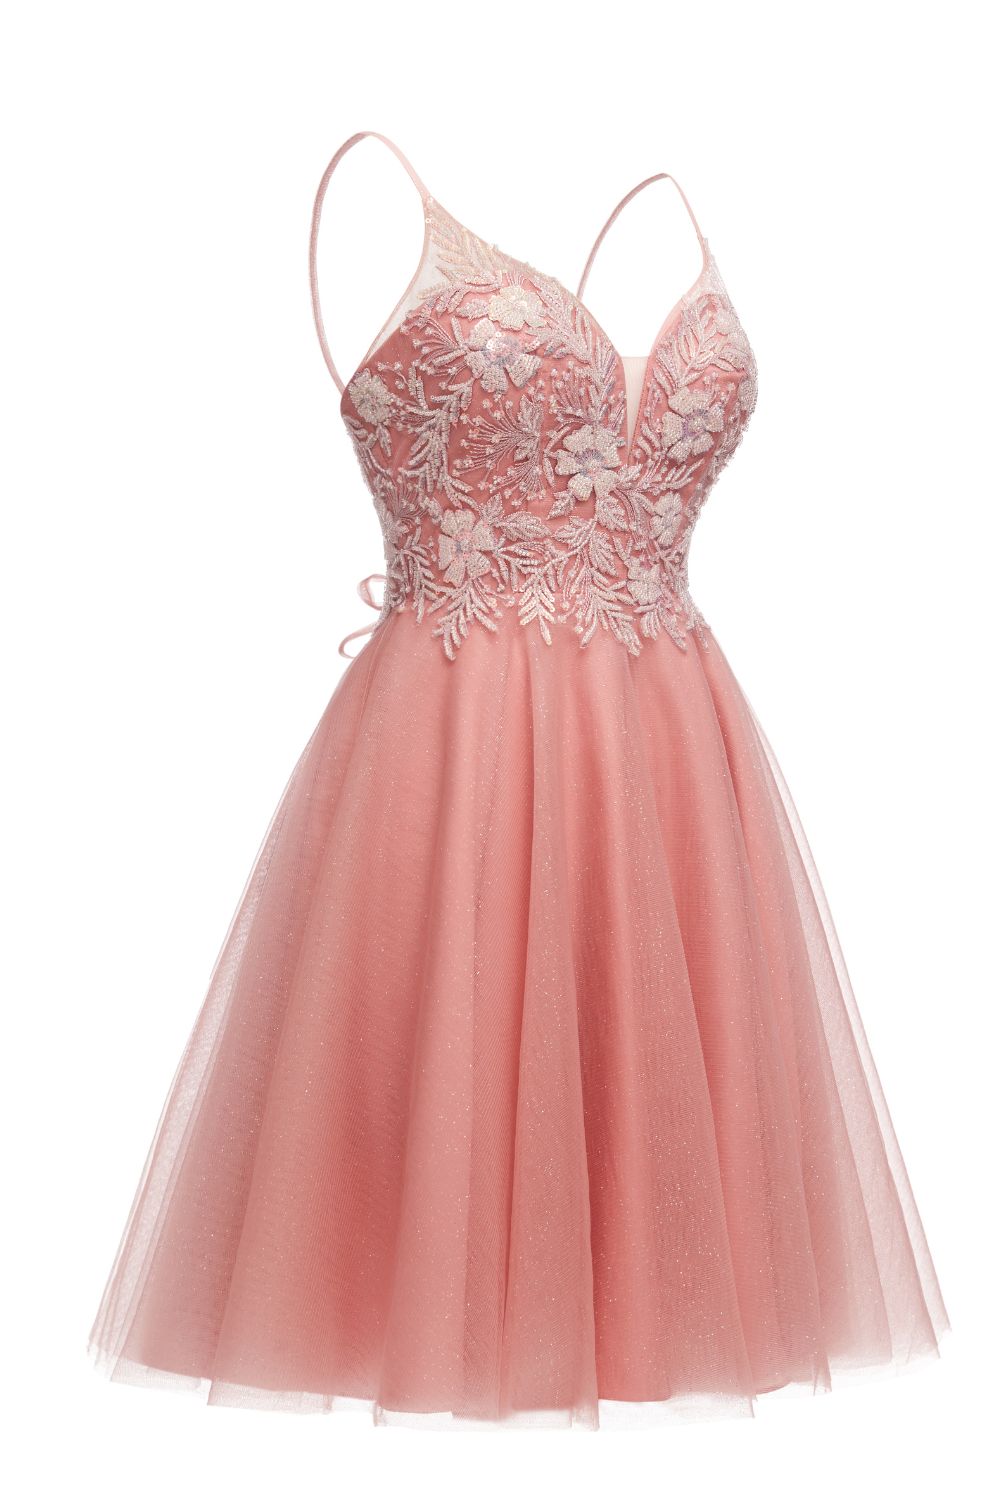 Hebochic Tulle Homecoming Short Dress Spaghetti Straps Mini Prom Dress